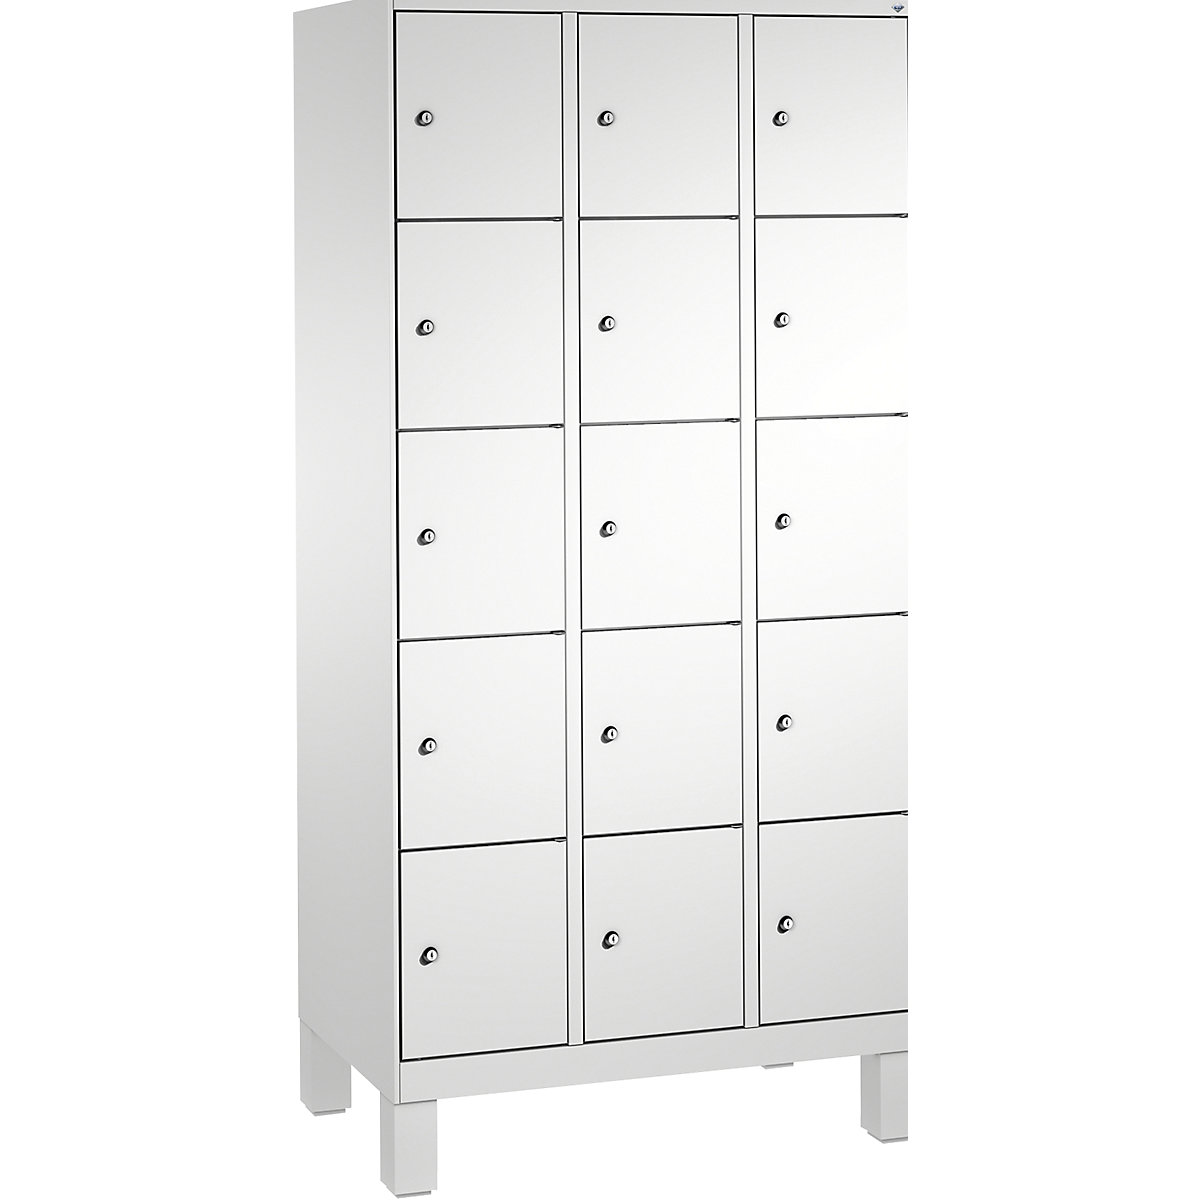 EVOLO locker unit, with feet – C+P, 3 compartments, 5 shelf compartments each, compartment width 300 mm, light grey-5